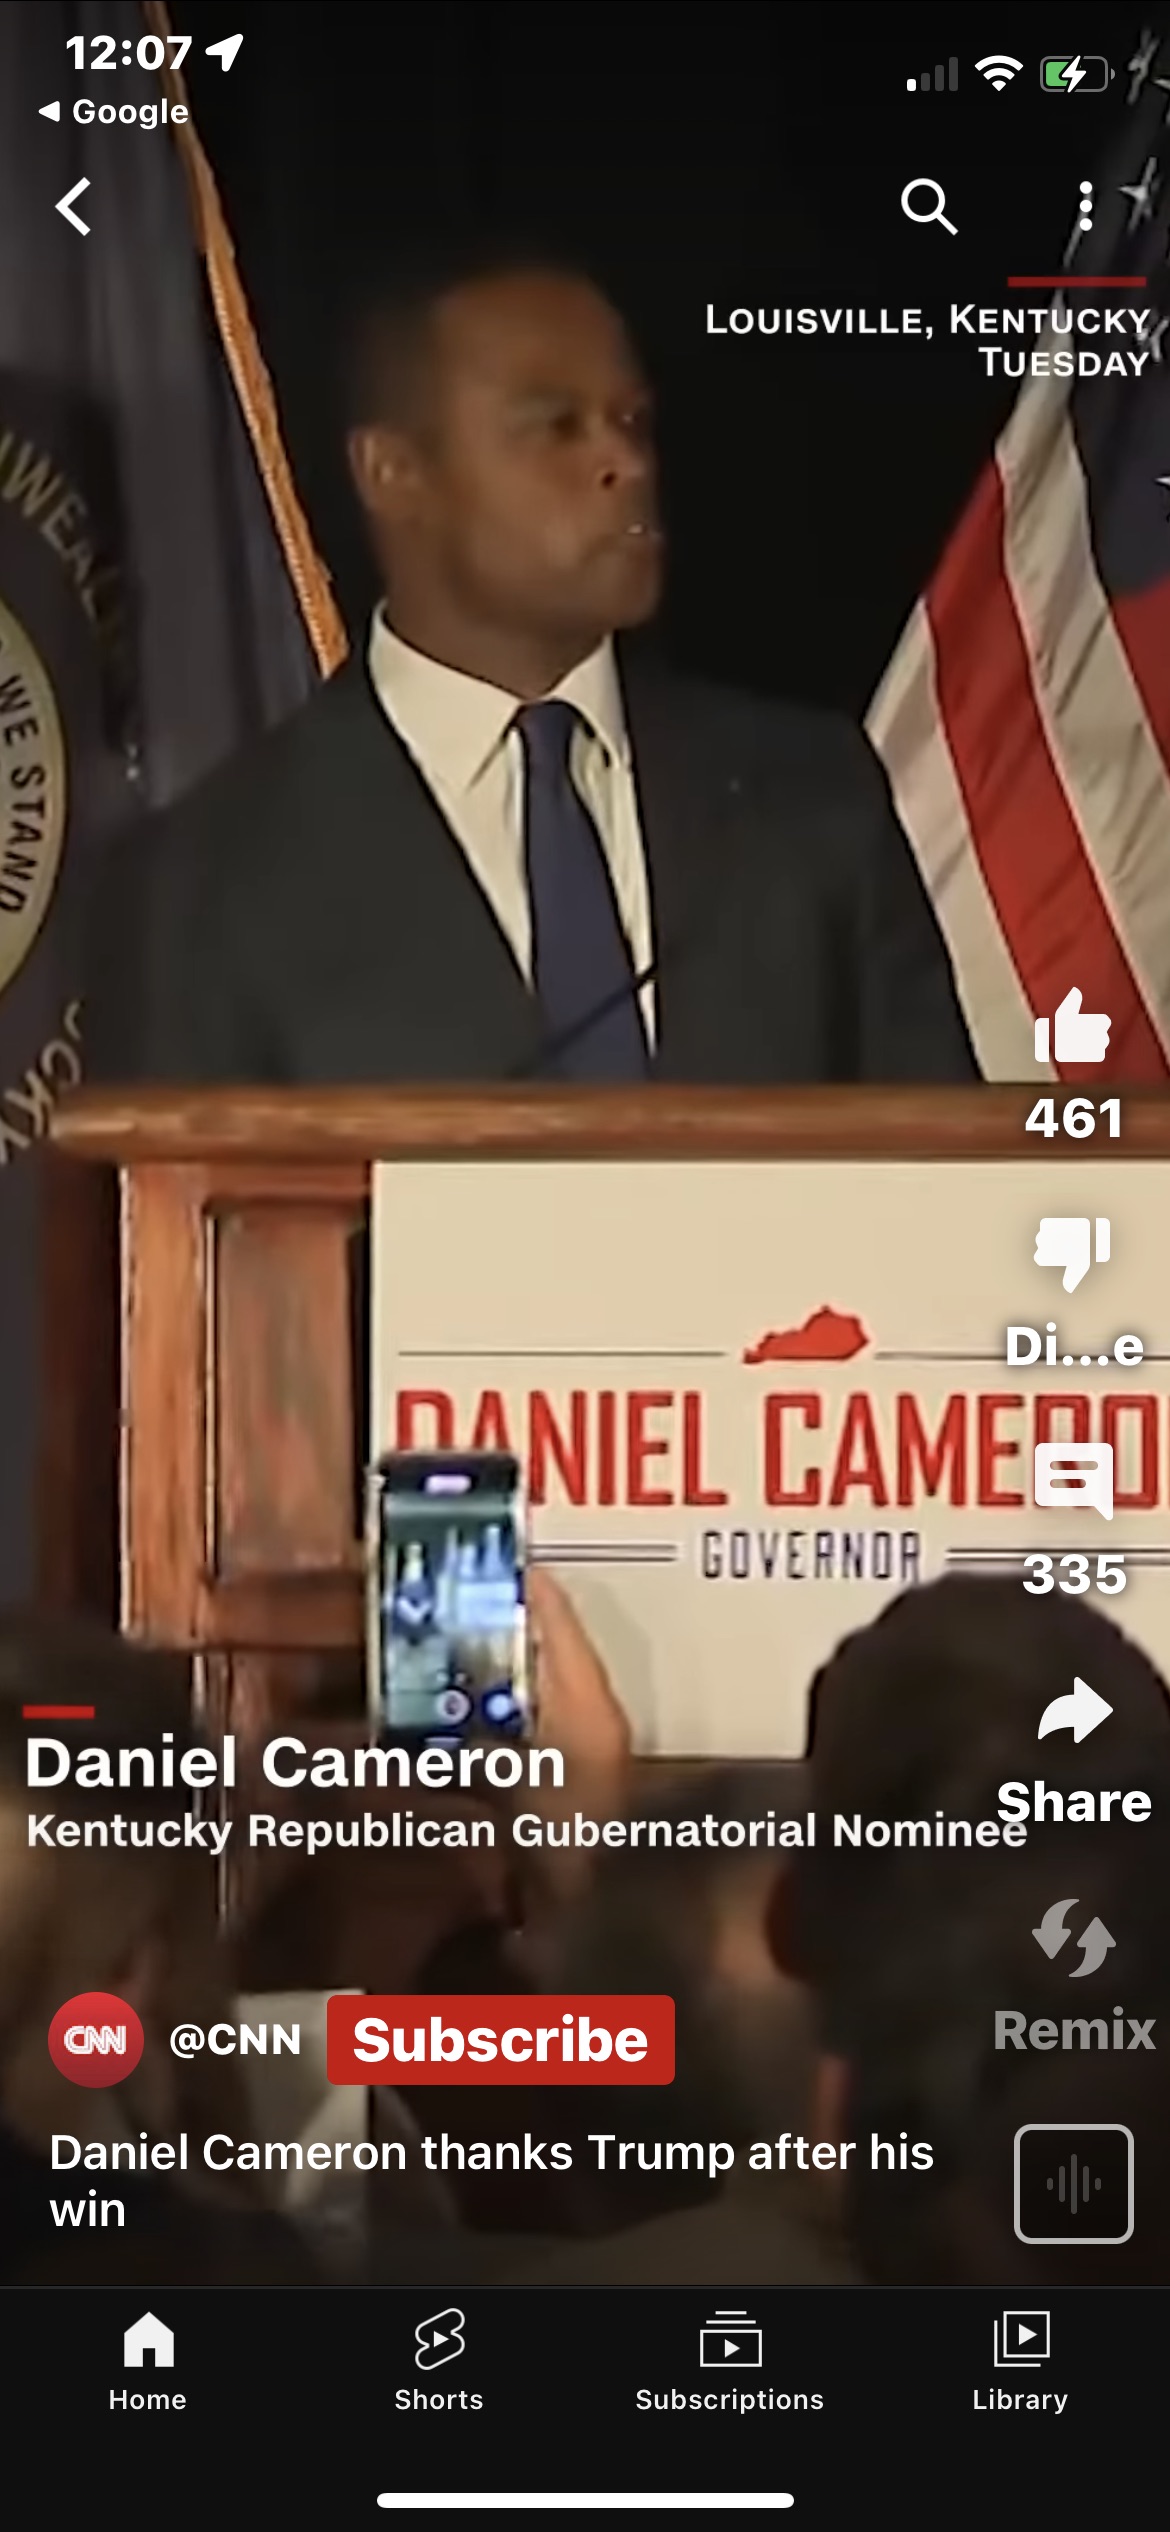 Daniel Cameron accepts the GOP gubernatorial nomination